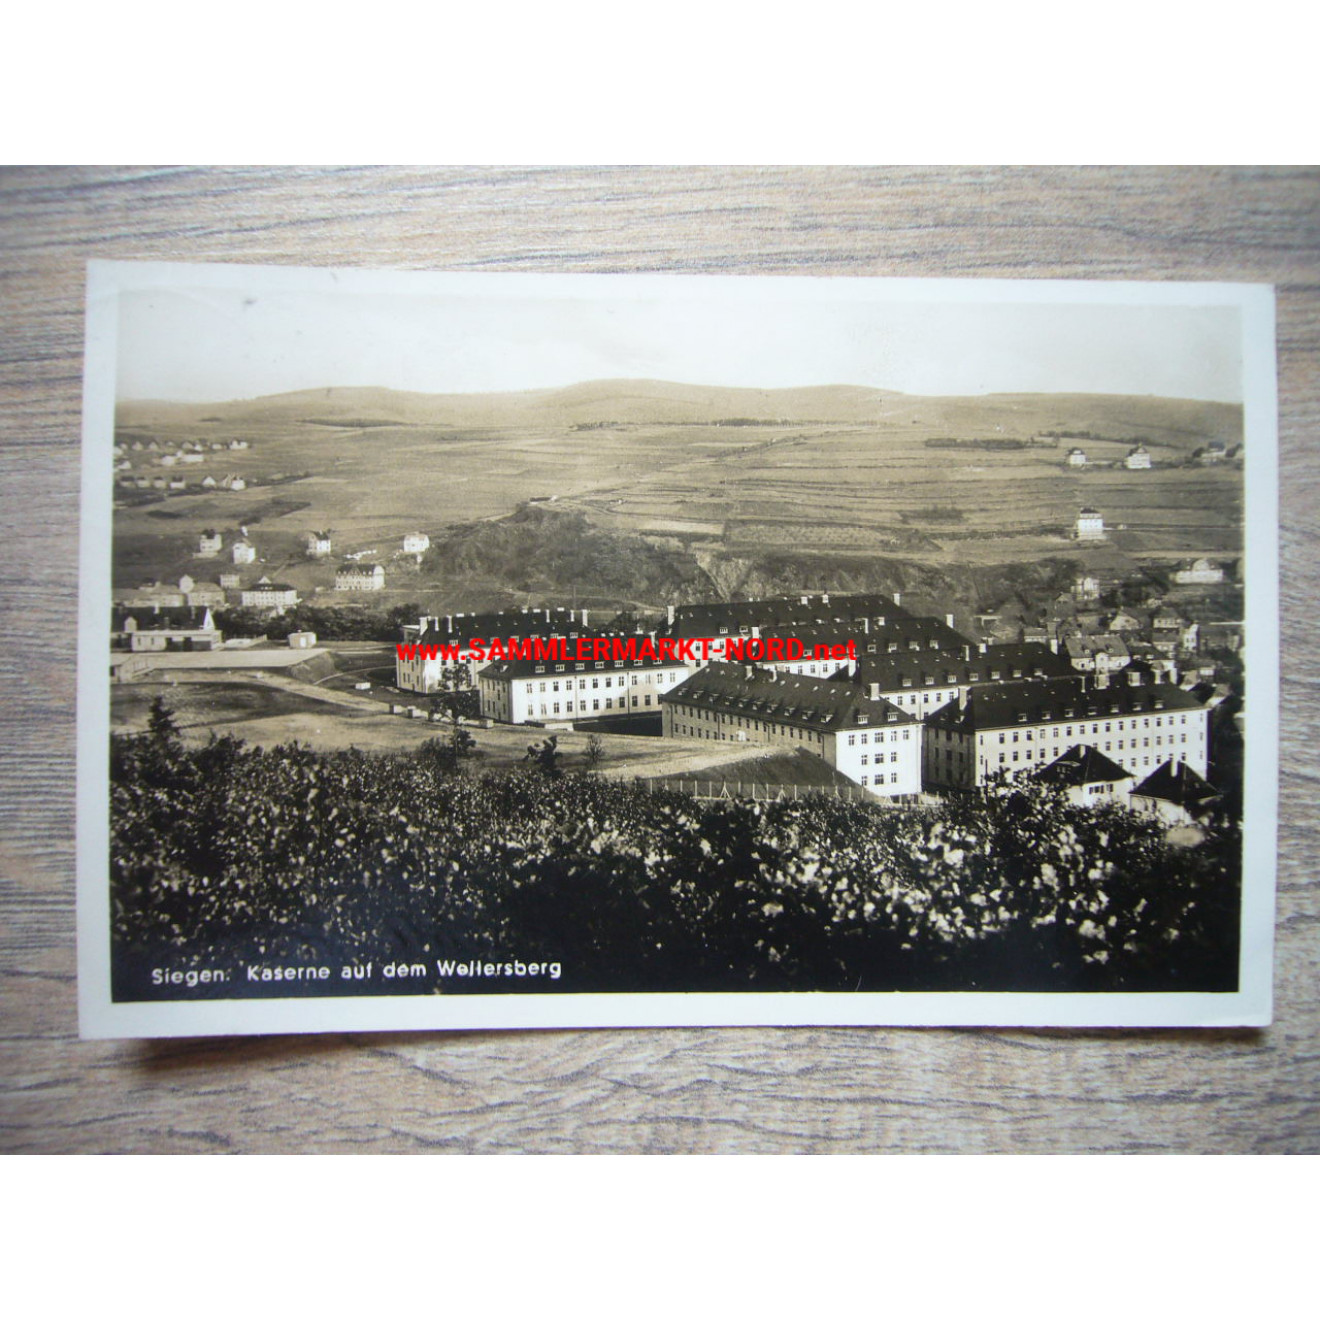 Siegen - barracks on the Wellersberg - postcard